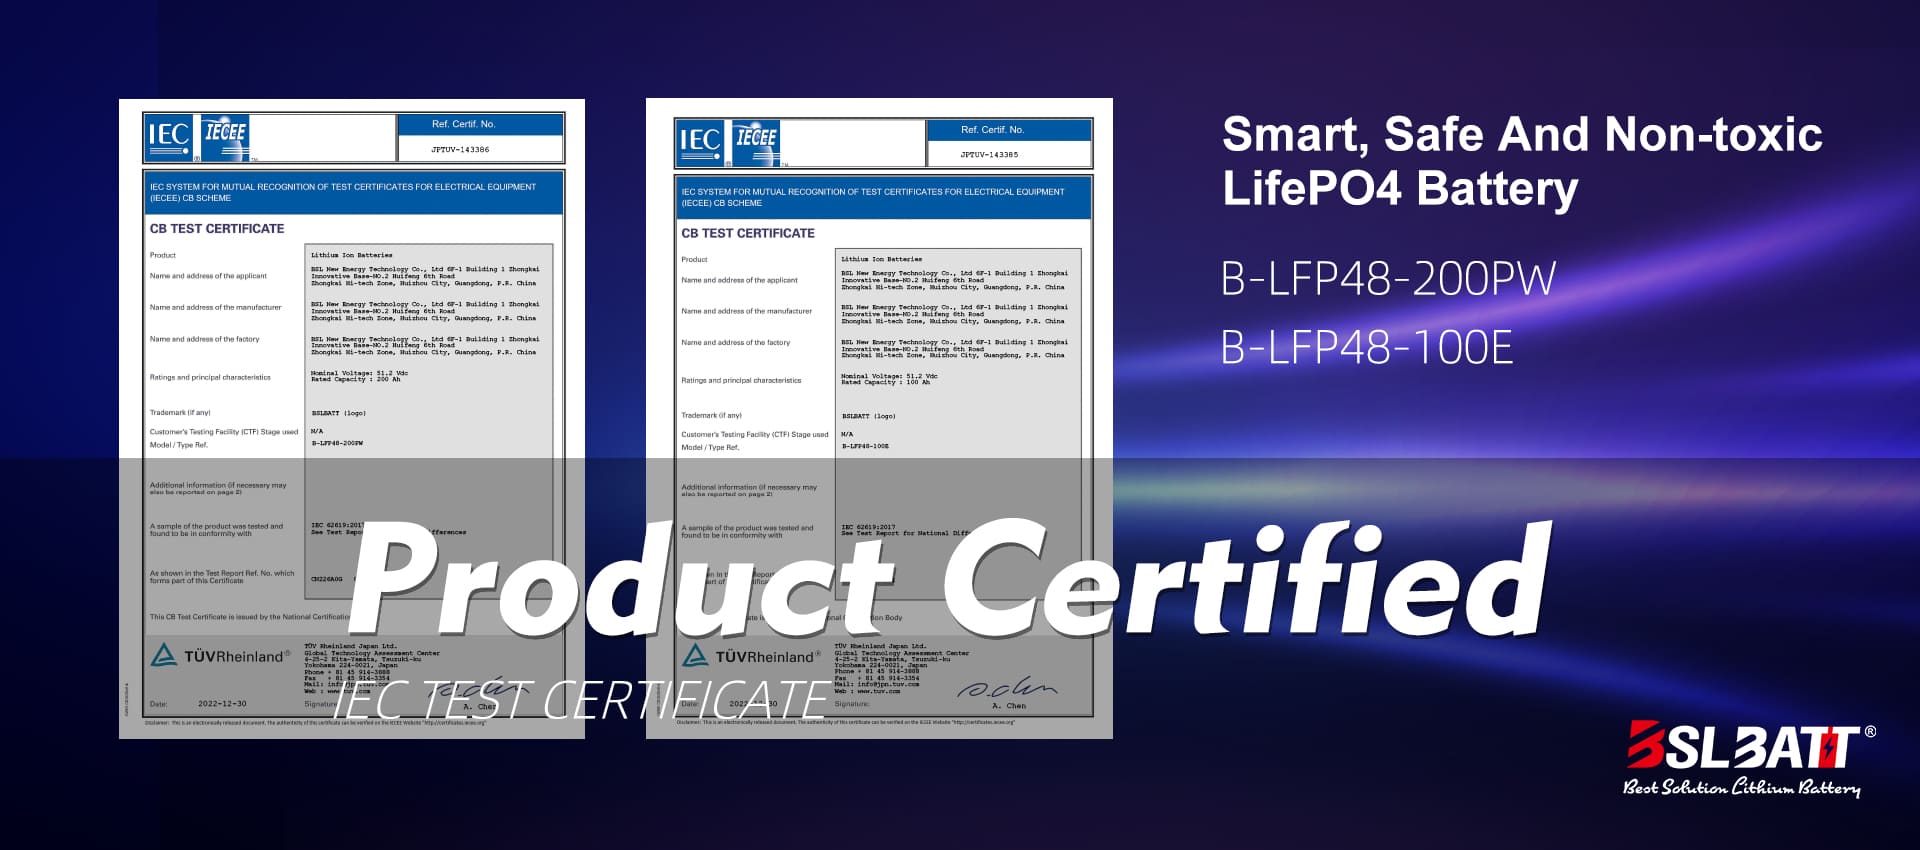 BSLBATT Achieves IEC 62619 Certification on Its 48V 100Ah LiFePO4 Battery 